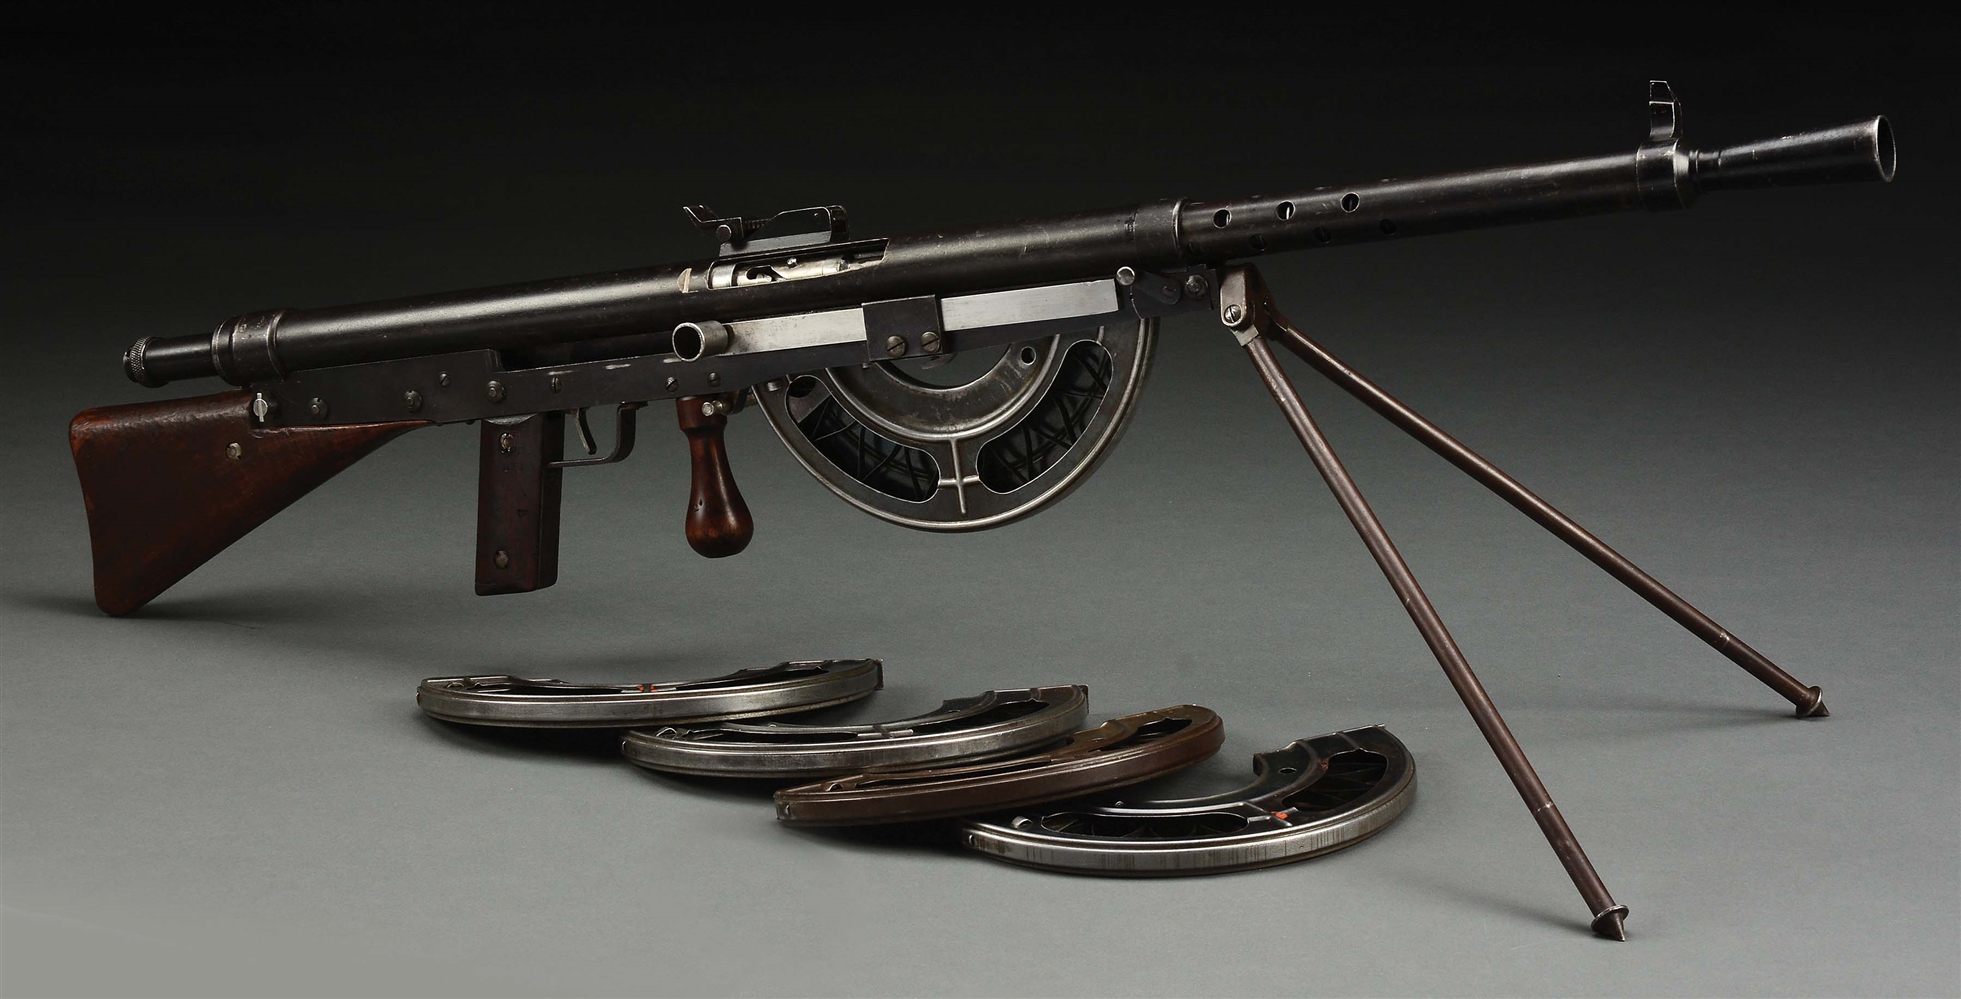 (N) FINE CONDITION SPECIMEN OF HISTORIC WORLD WAR I FRENCH CHAUCHAT MODEL 1915 MACHINE GUN (CURIO AND RELIC).